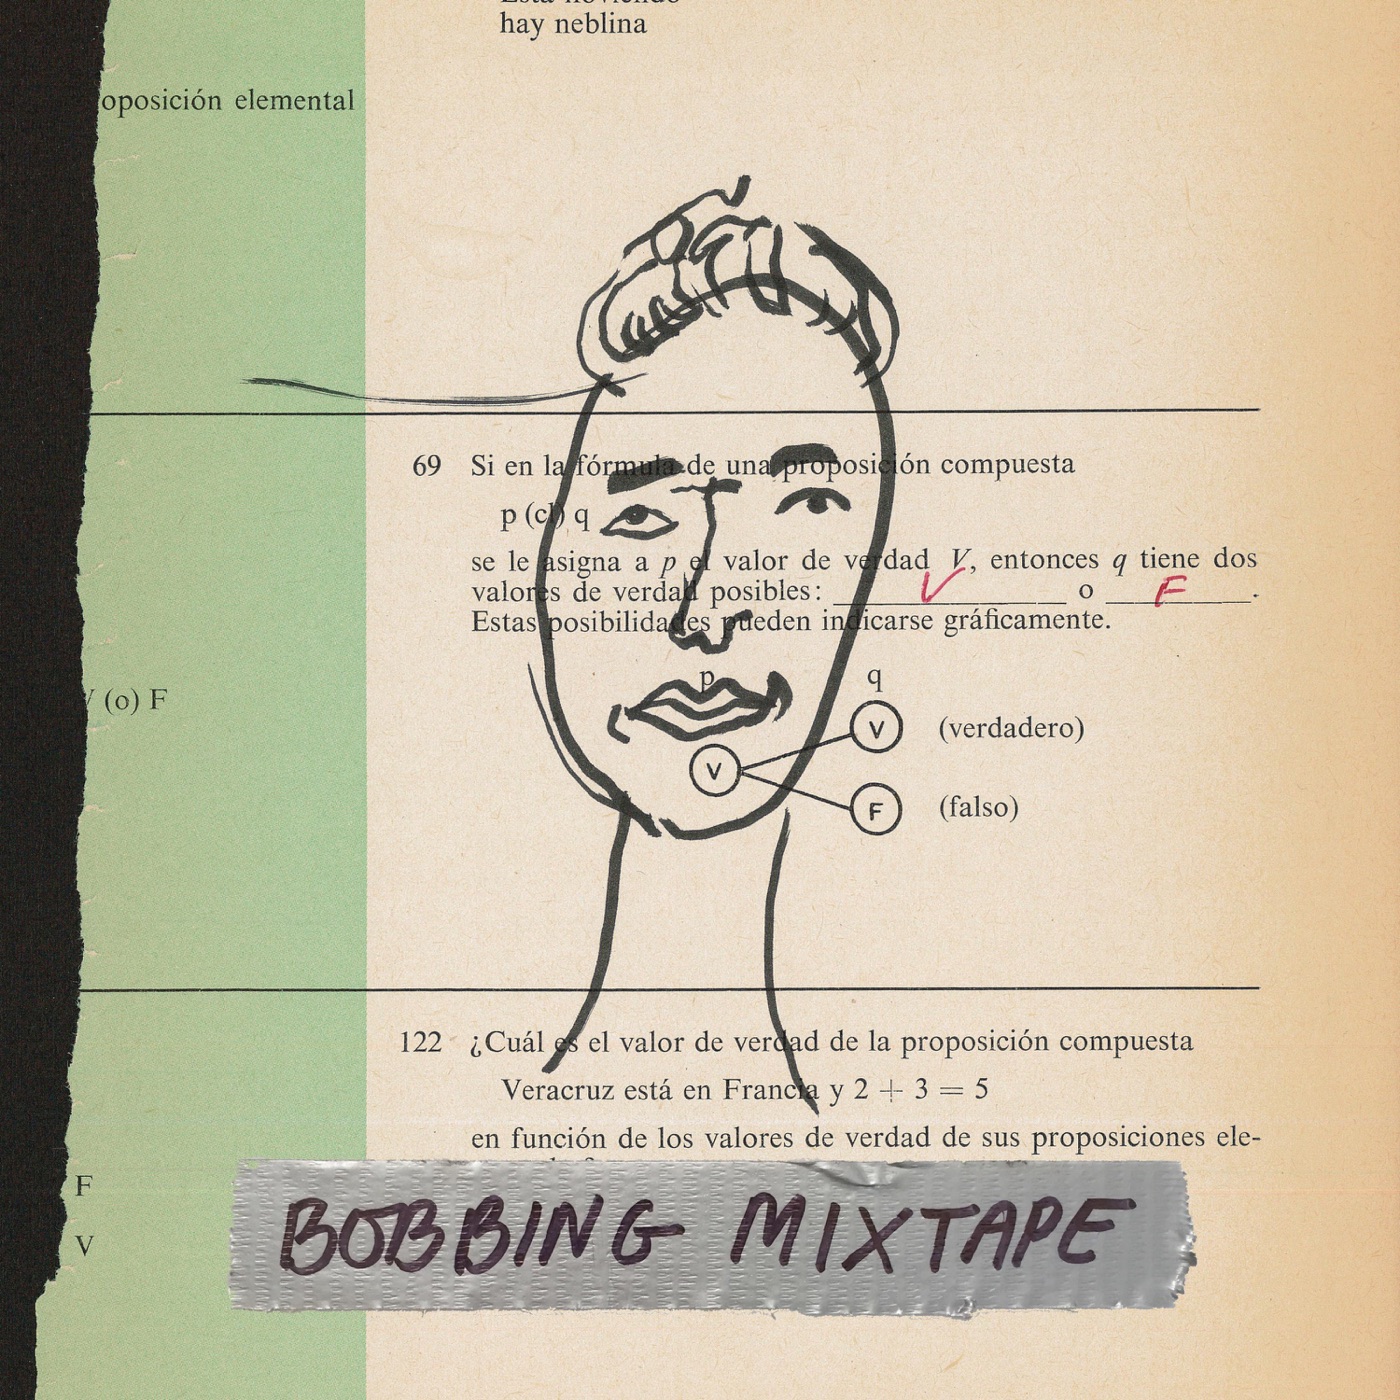 Mixtape by Bobbing